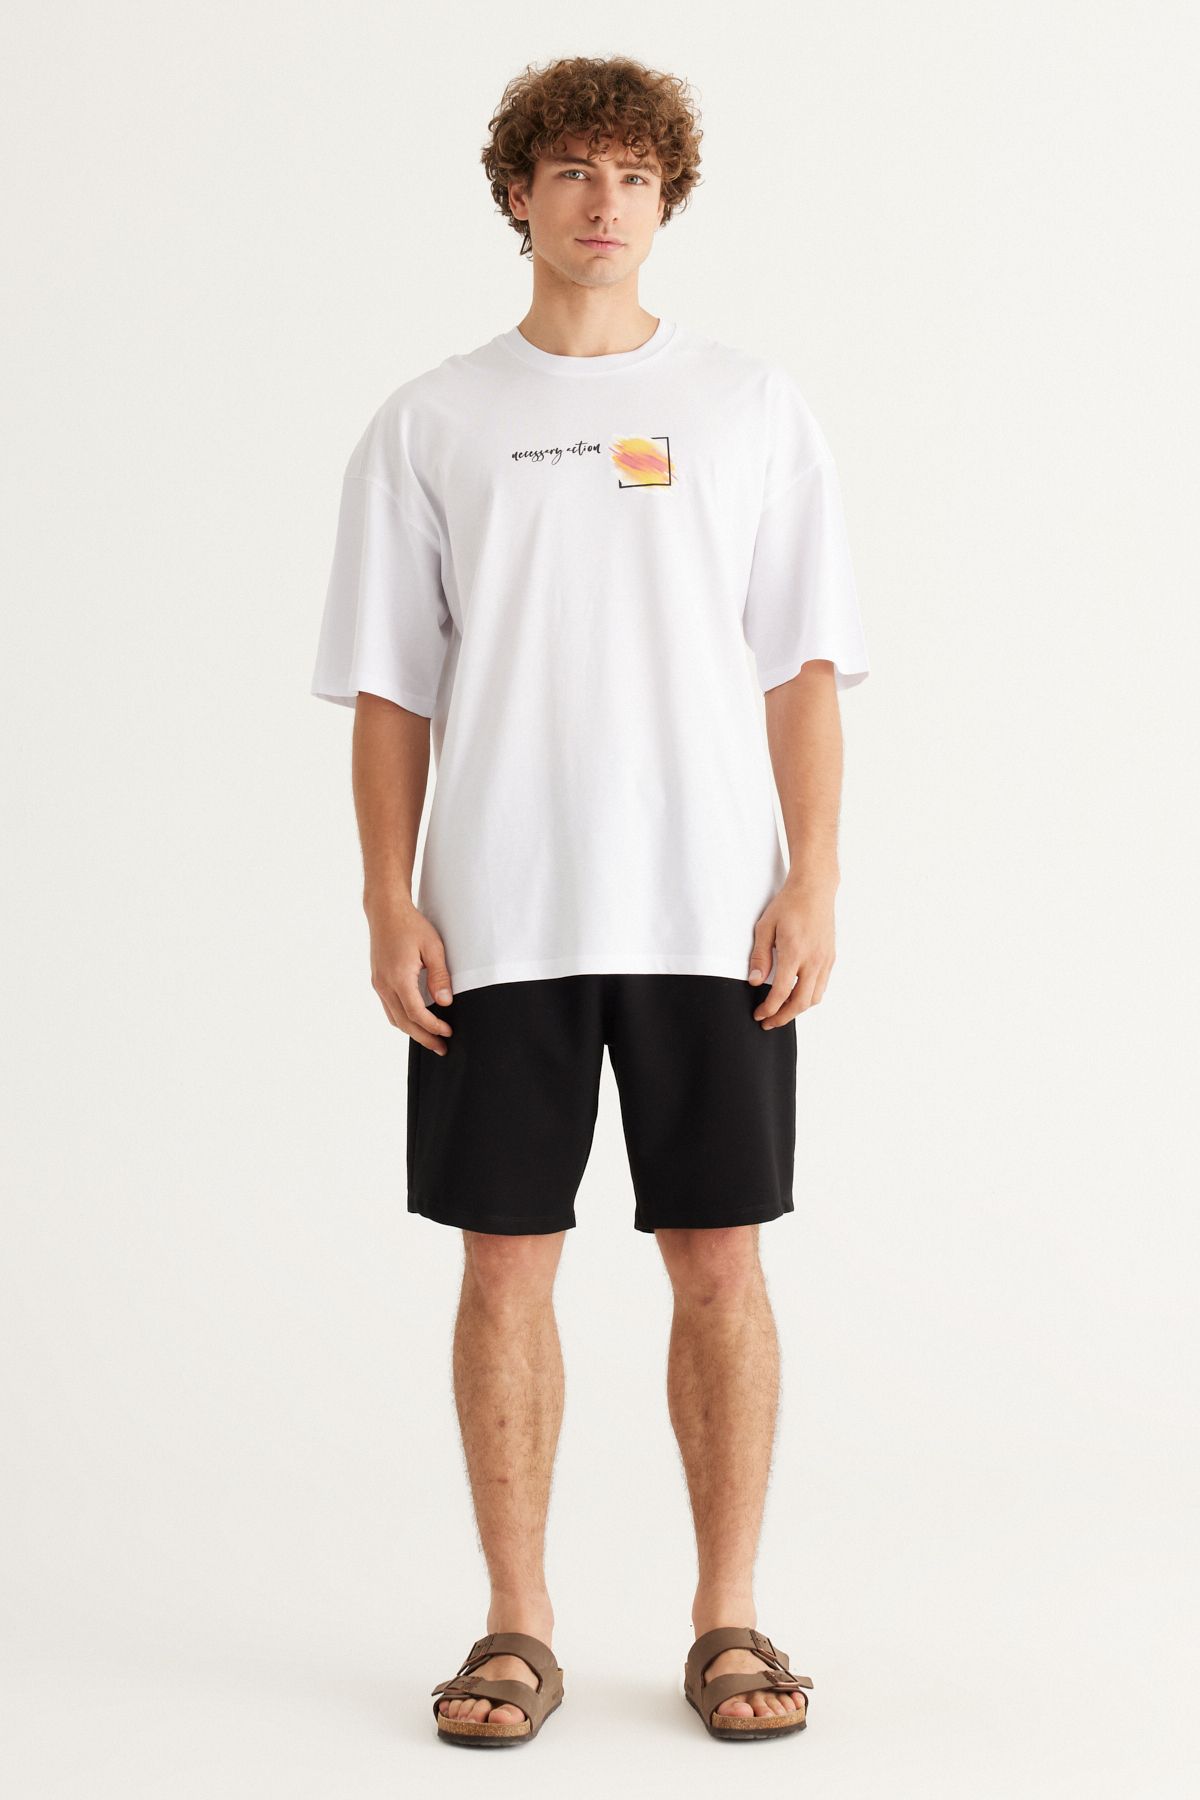 AC&Co / Altınyıldız Classics تی شرت آستین کوتاه مردانه سفید سایز گشاد و یقه صد در نخی